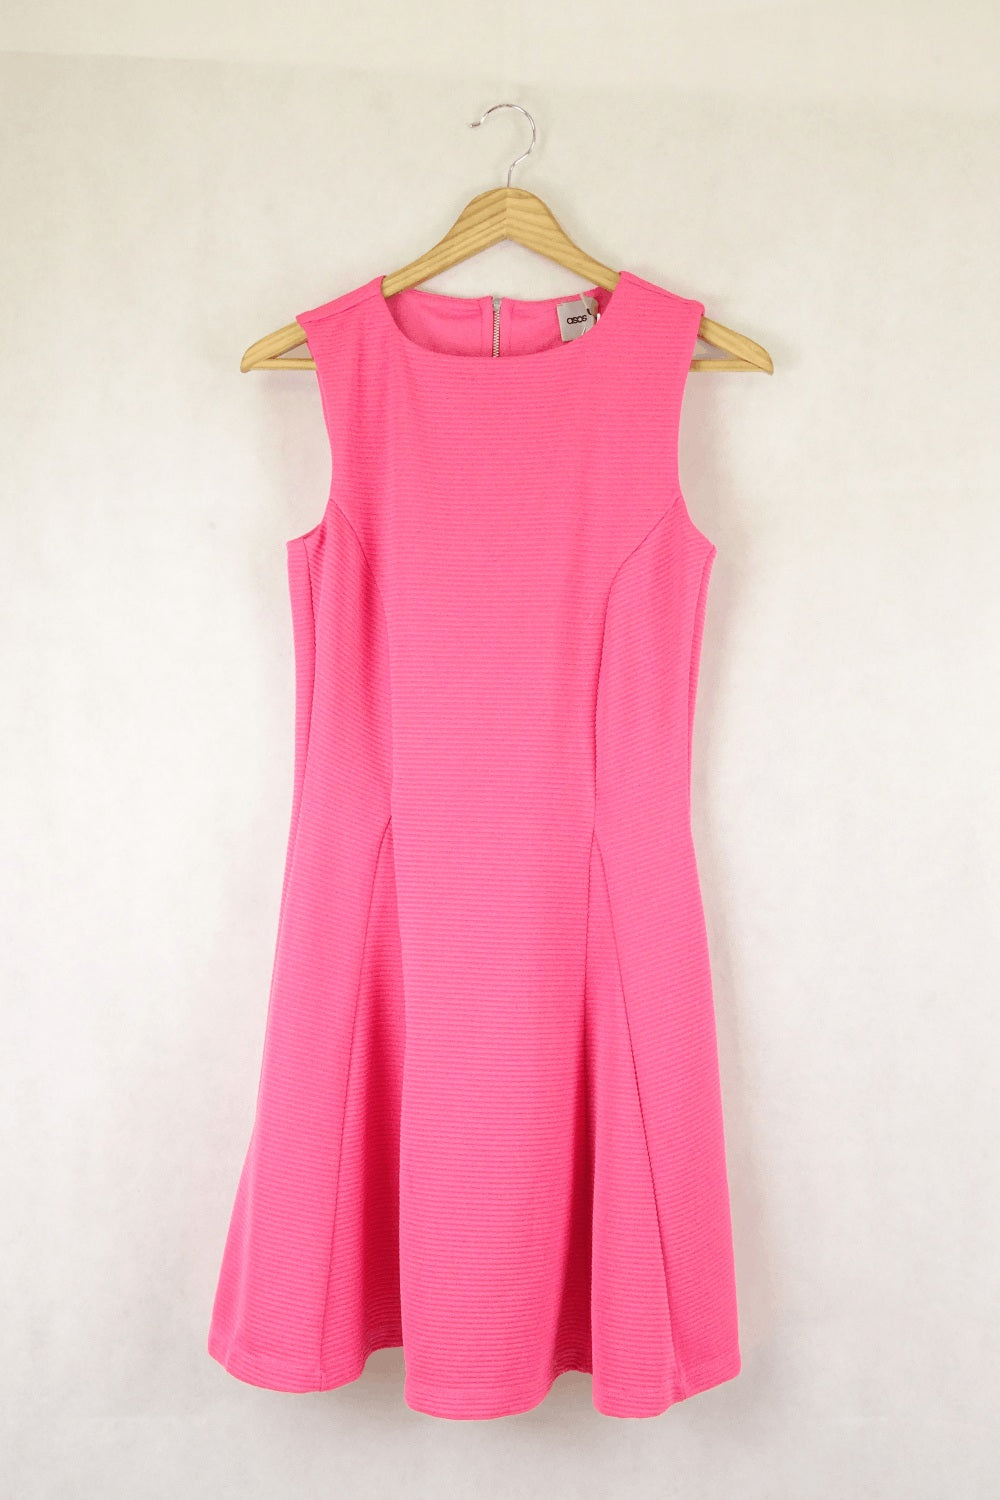 Asos Pink Dress 8